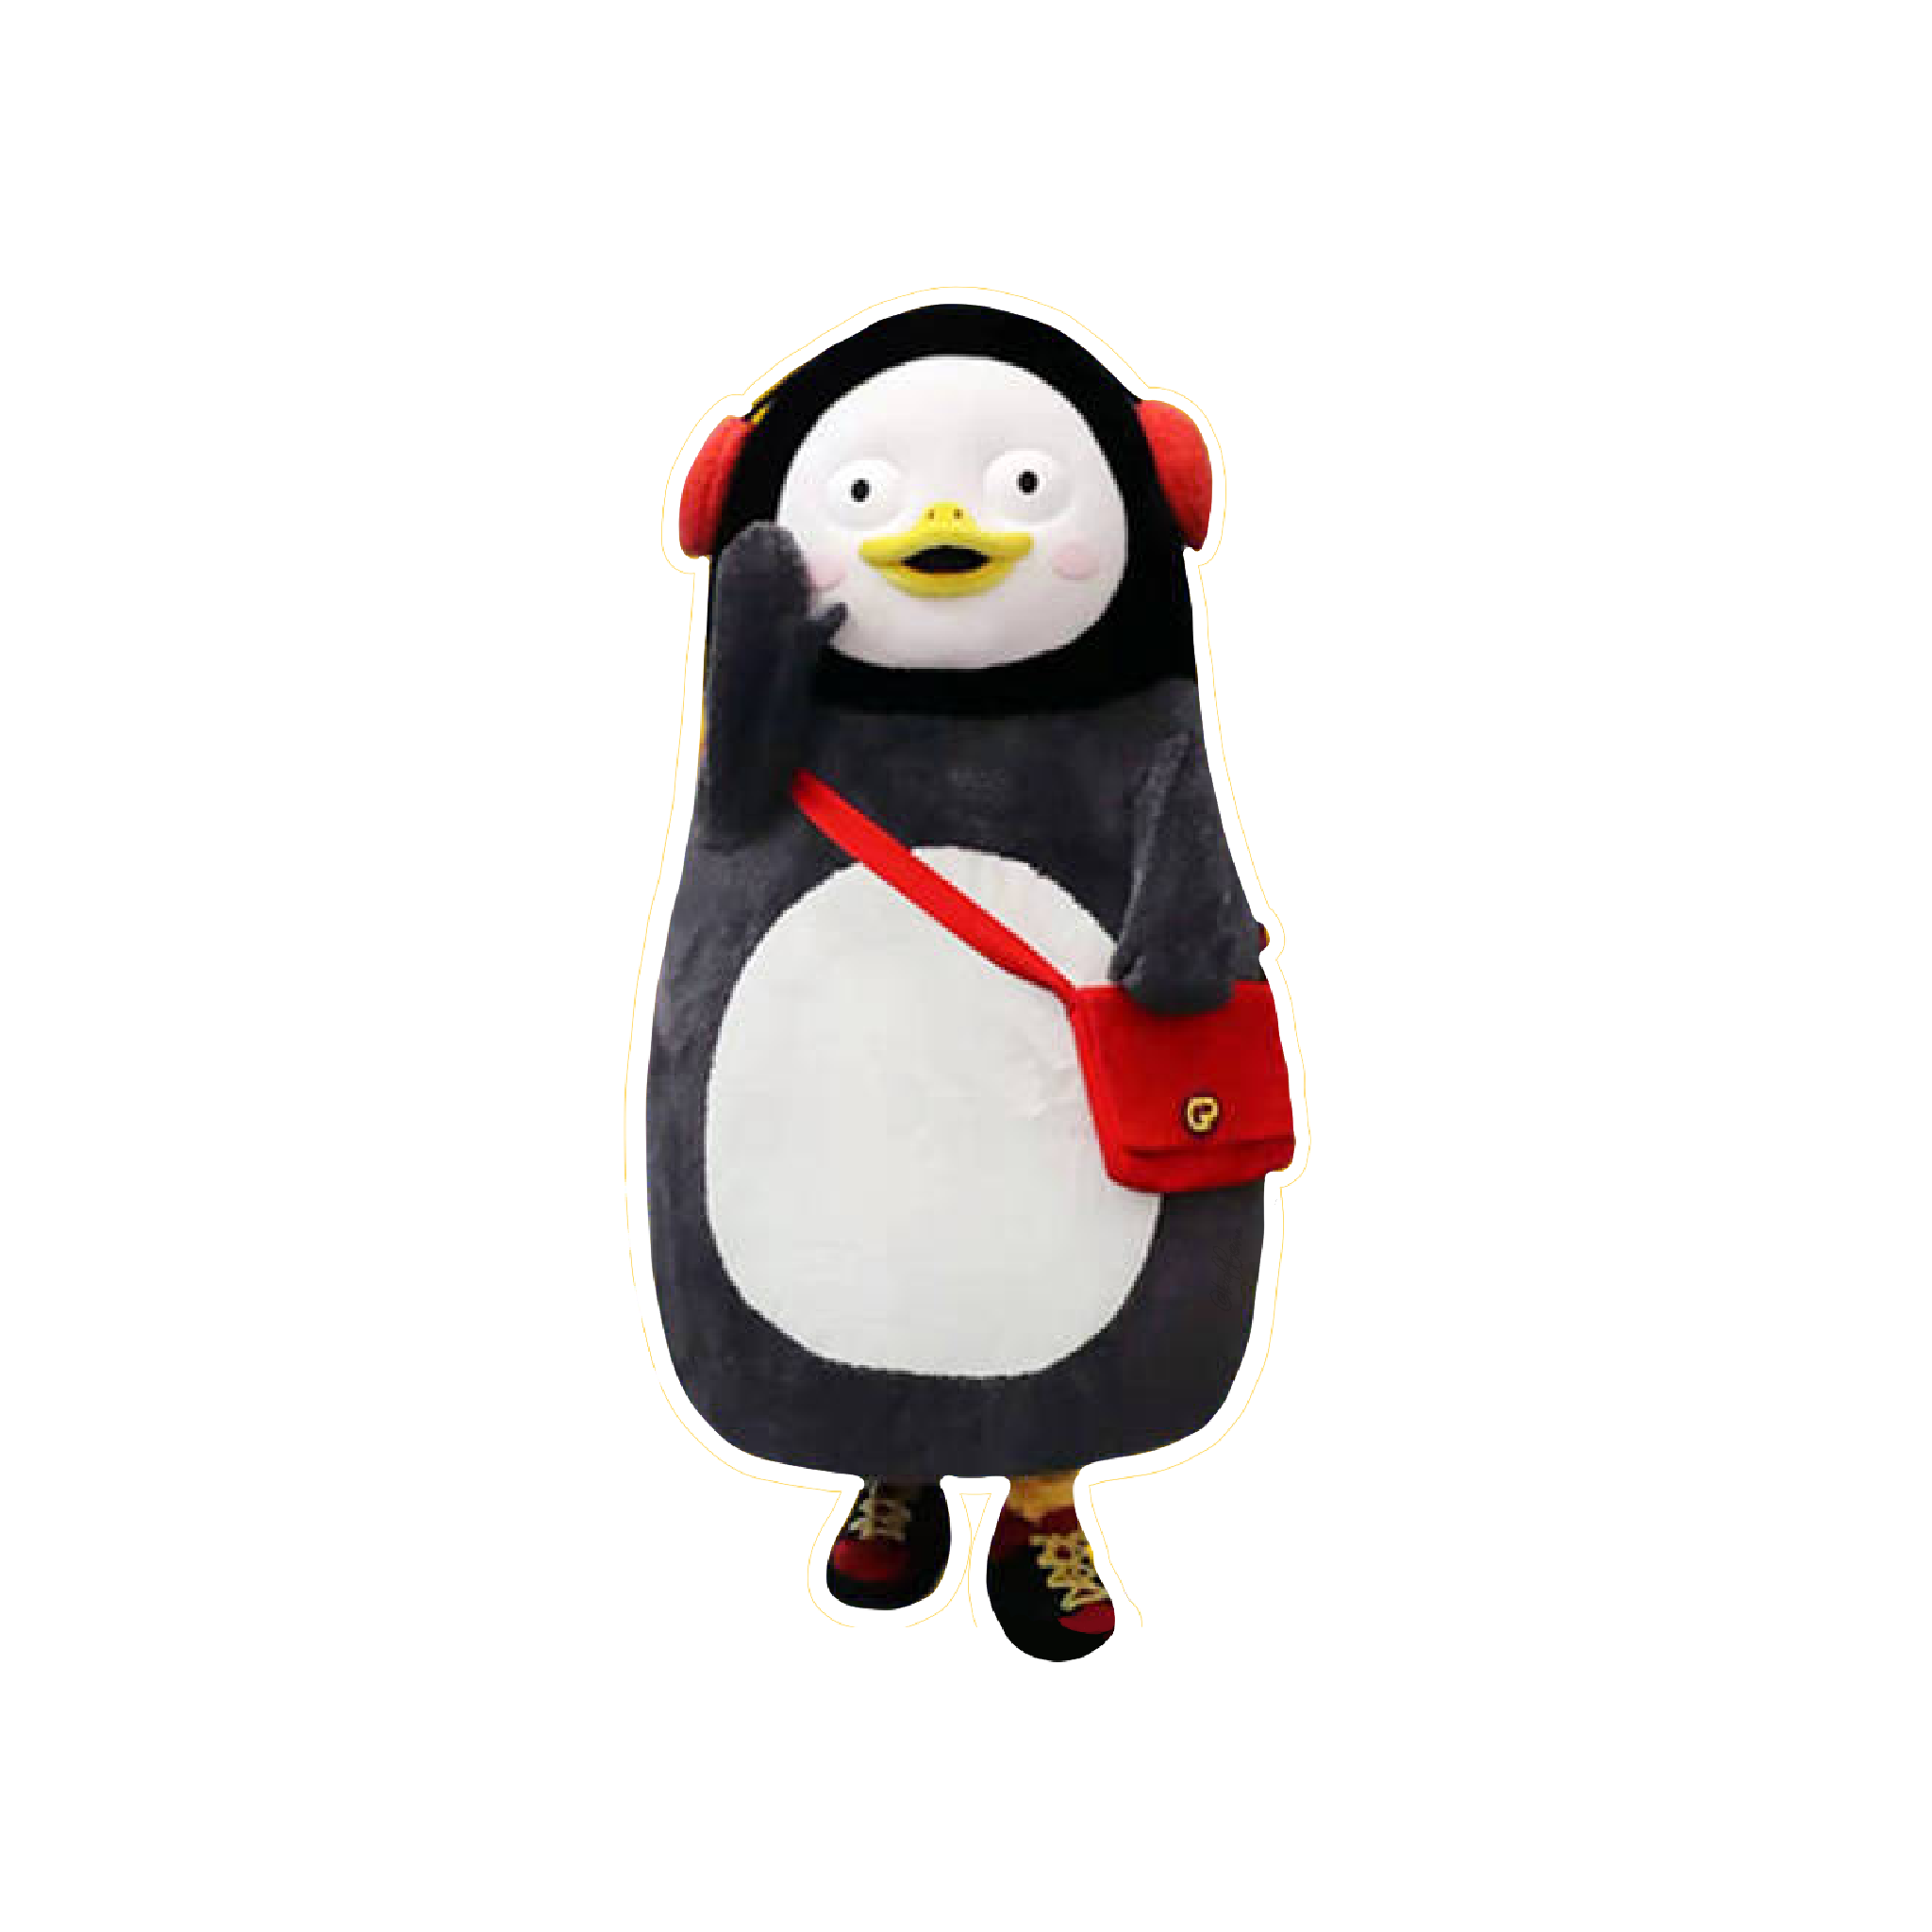 Pengsoo 펭수 企鹅 Penguin 펭권 318844685284211 By Kaffeine 2025